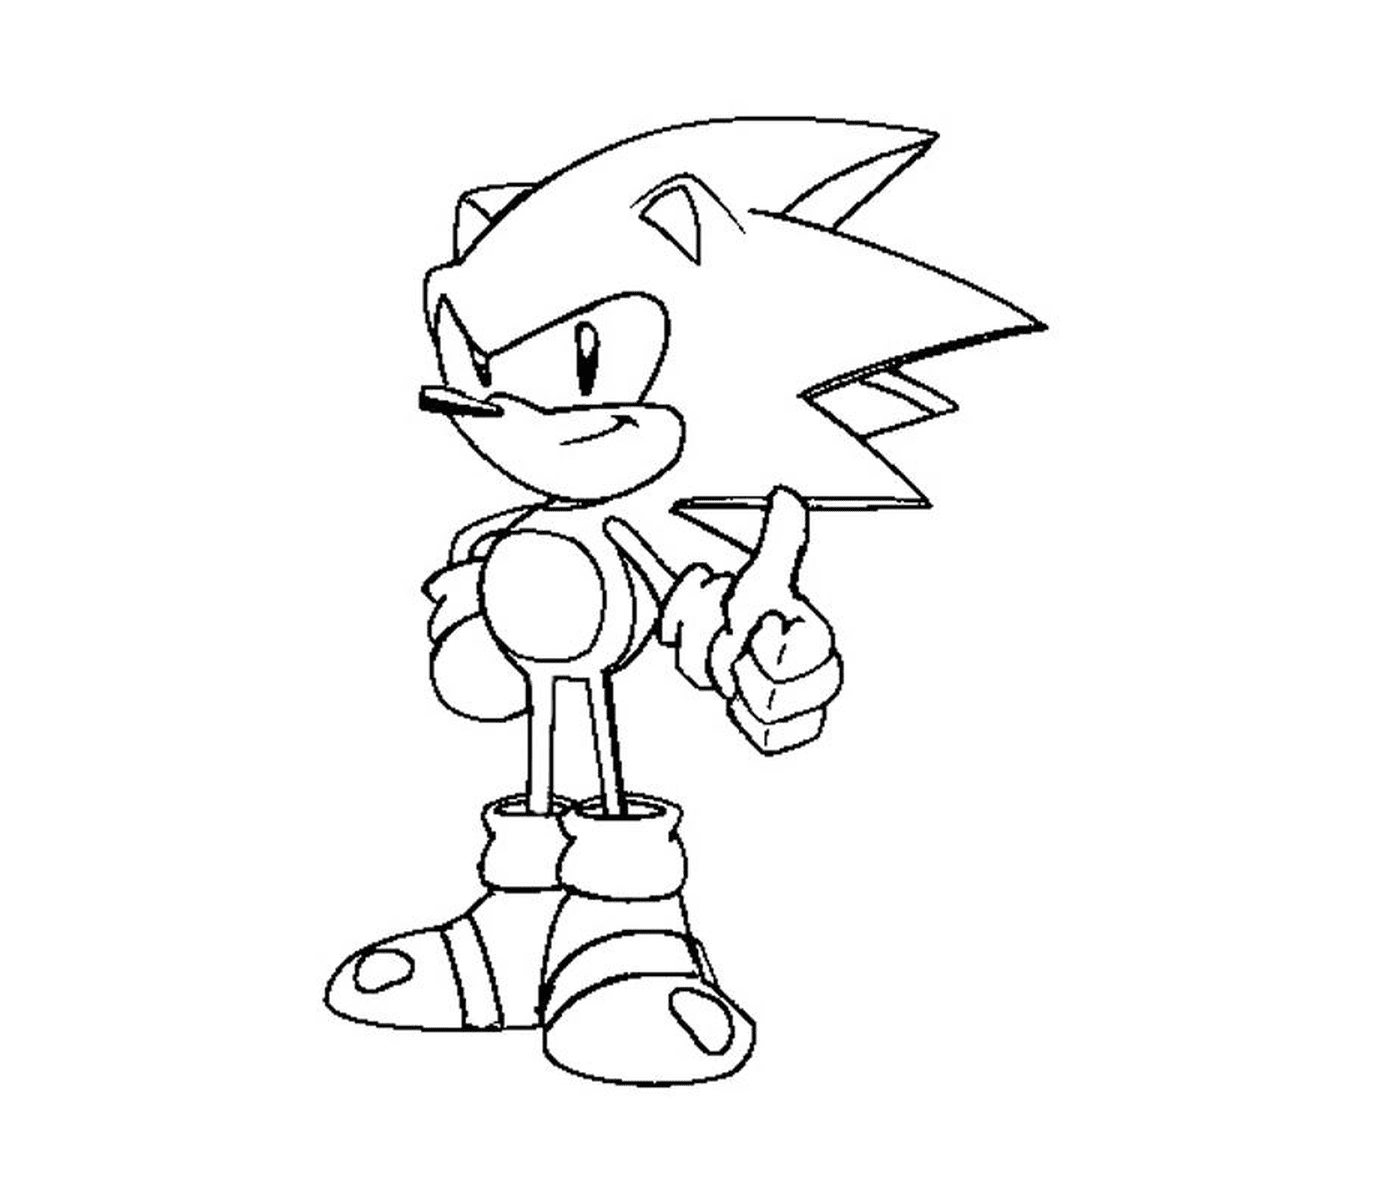  Súper Sonic lleno de poder 